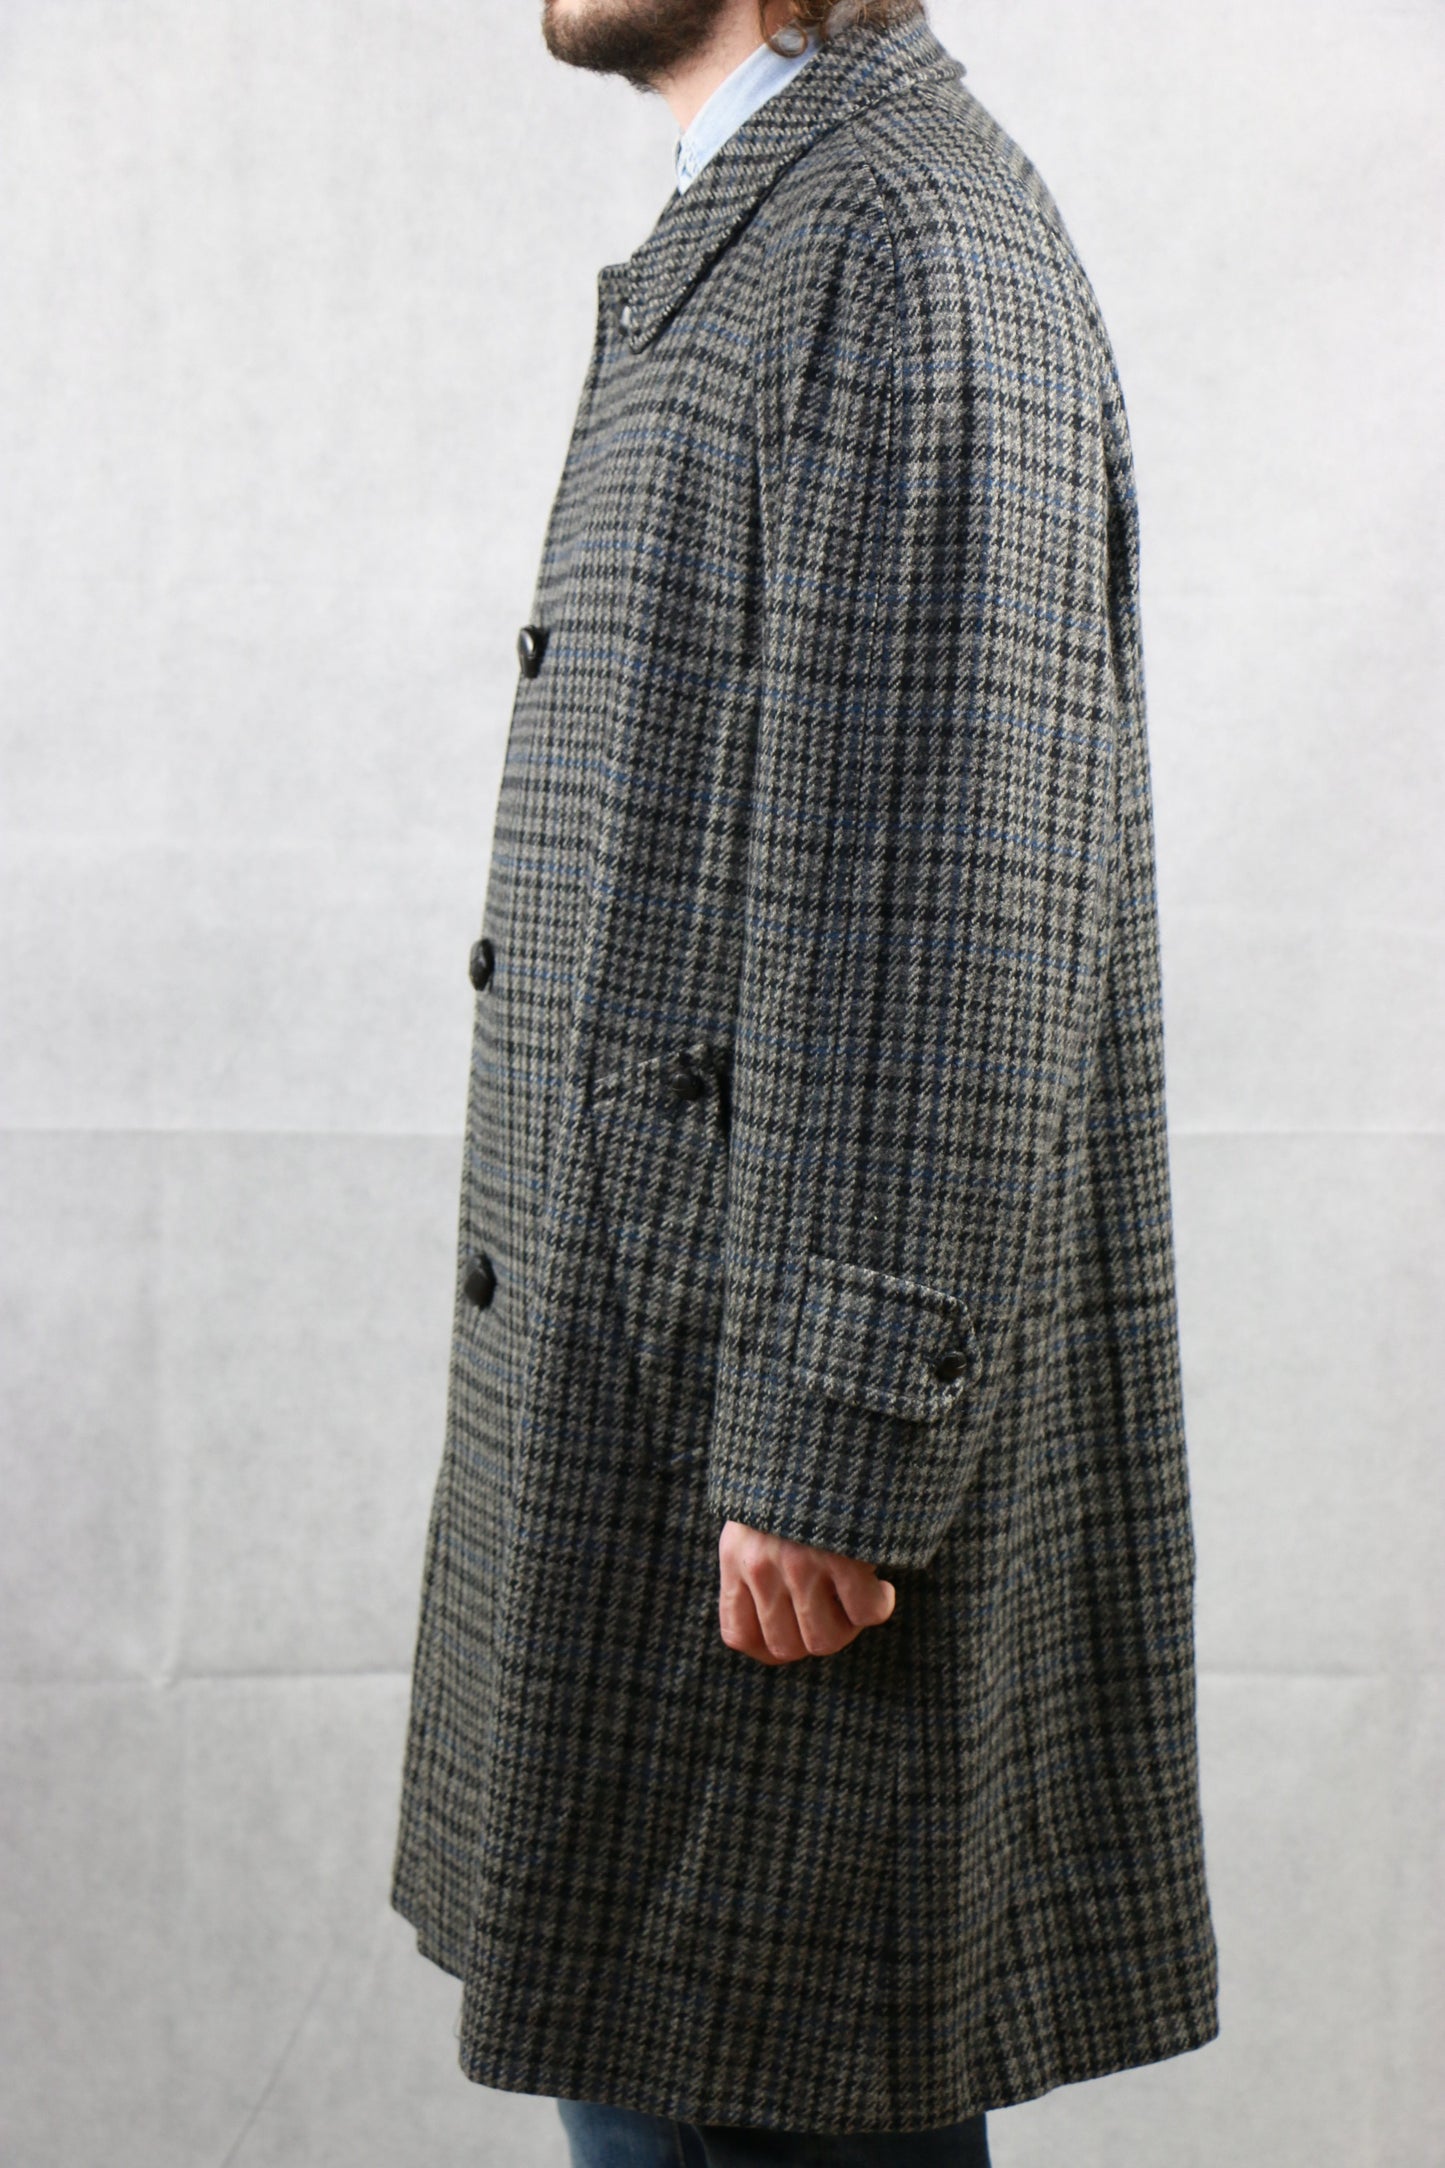 Aquascutum Checkered Wool Coat - vintage clothing clochard92.com